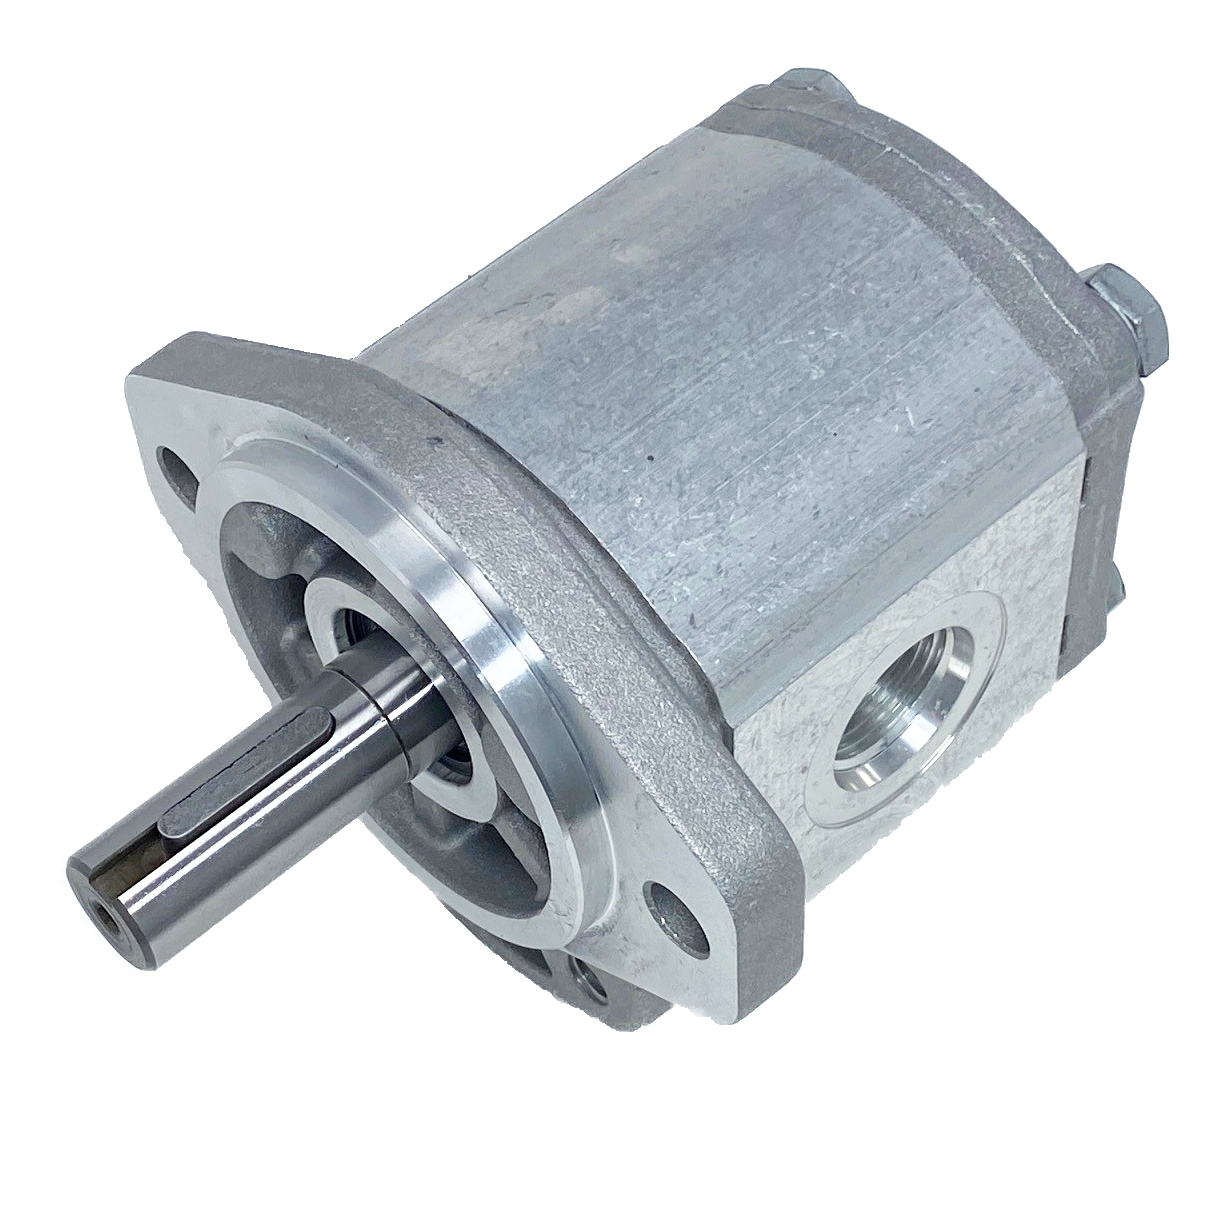 PLM20.16R0-49S1-LOC/OD-N-EL : Casappa Polaris Gear Motor, 16.85cc, 3625psi Rated, 3000RPM, Reversible Rear External Drain, 3/4" Bore x 3/16" Key Shaft, SAE A 2-Bolt Flange, 0.625 (5/8") #10 SAE Inlet, 0.75 (3/4") #12 SAE Outlet, Aluminum Body & Flange